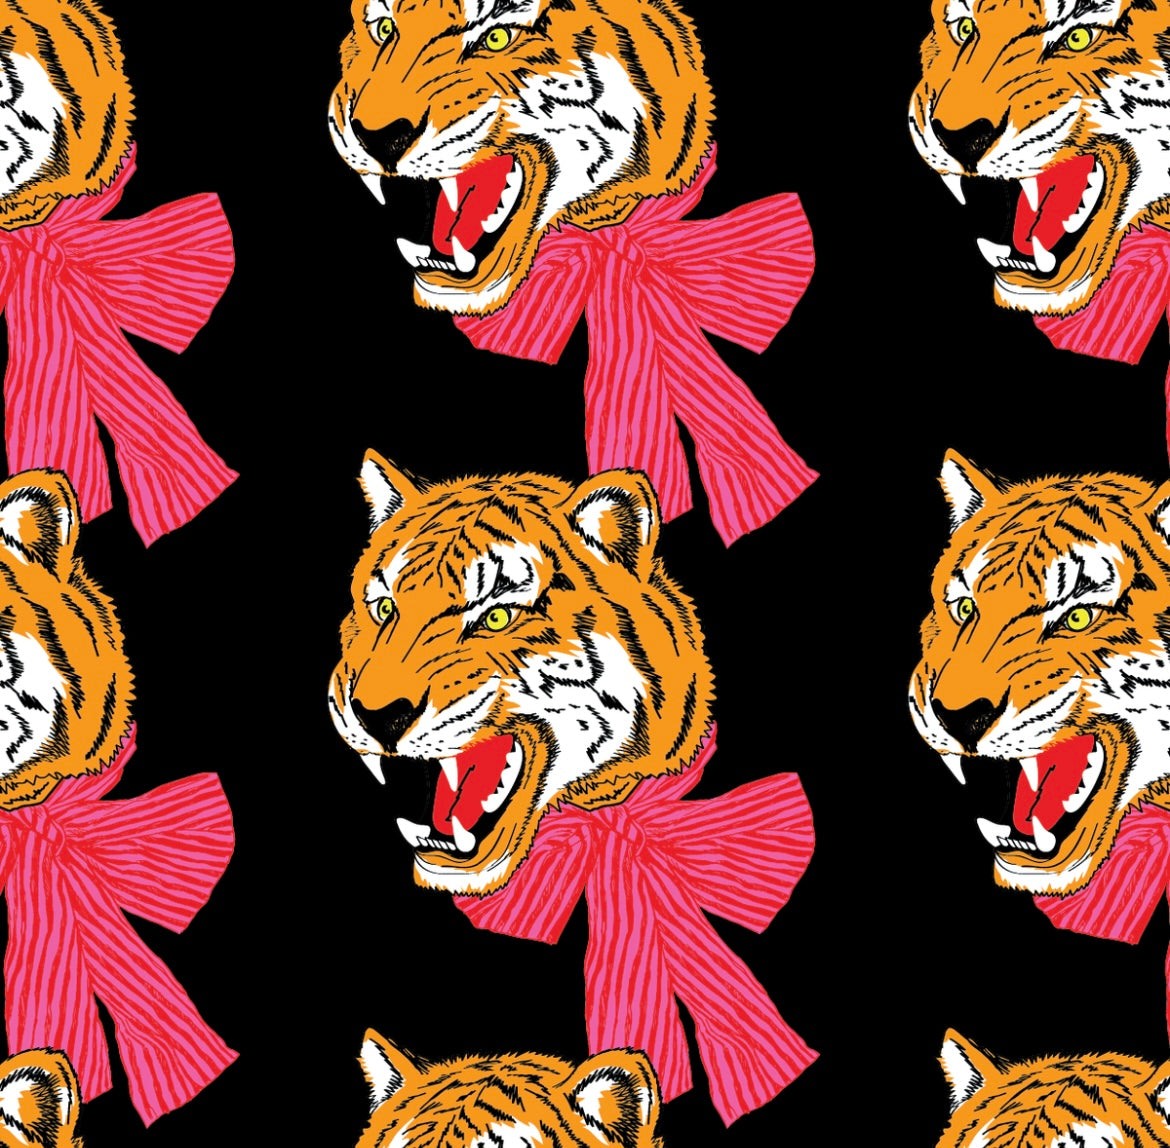 Wrapping Sheets | Fierce Tiger, Sassy Bow